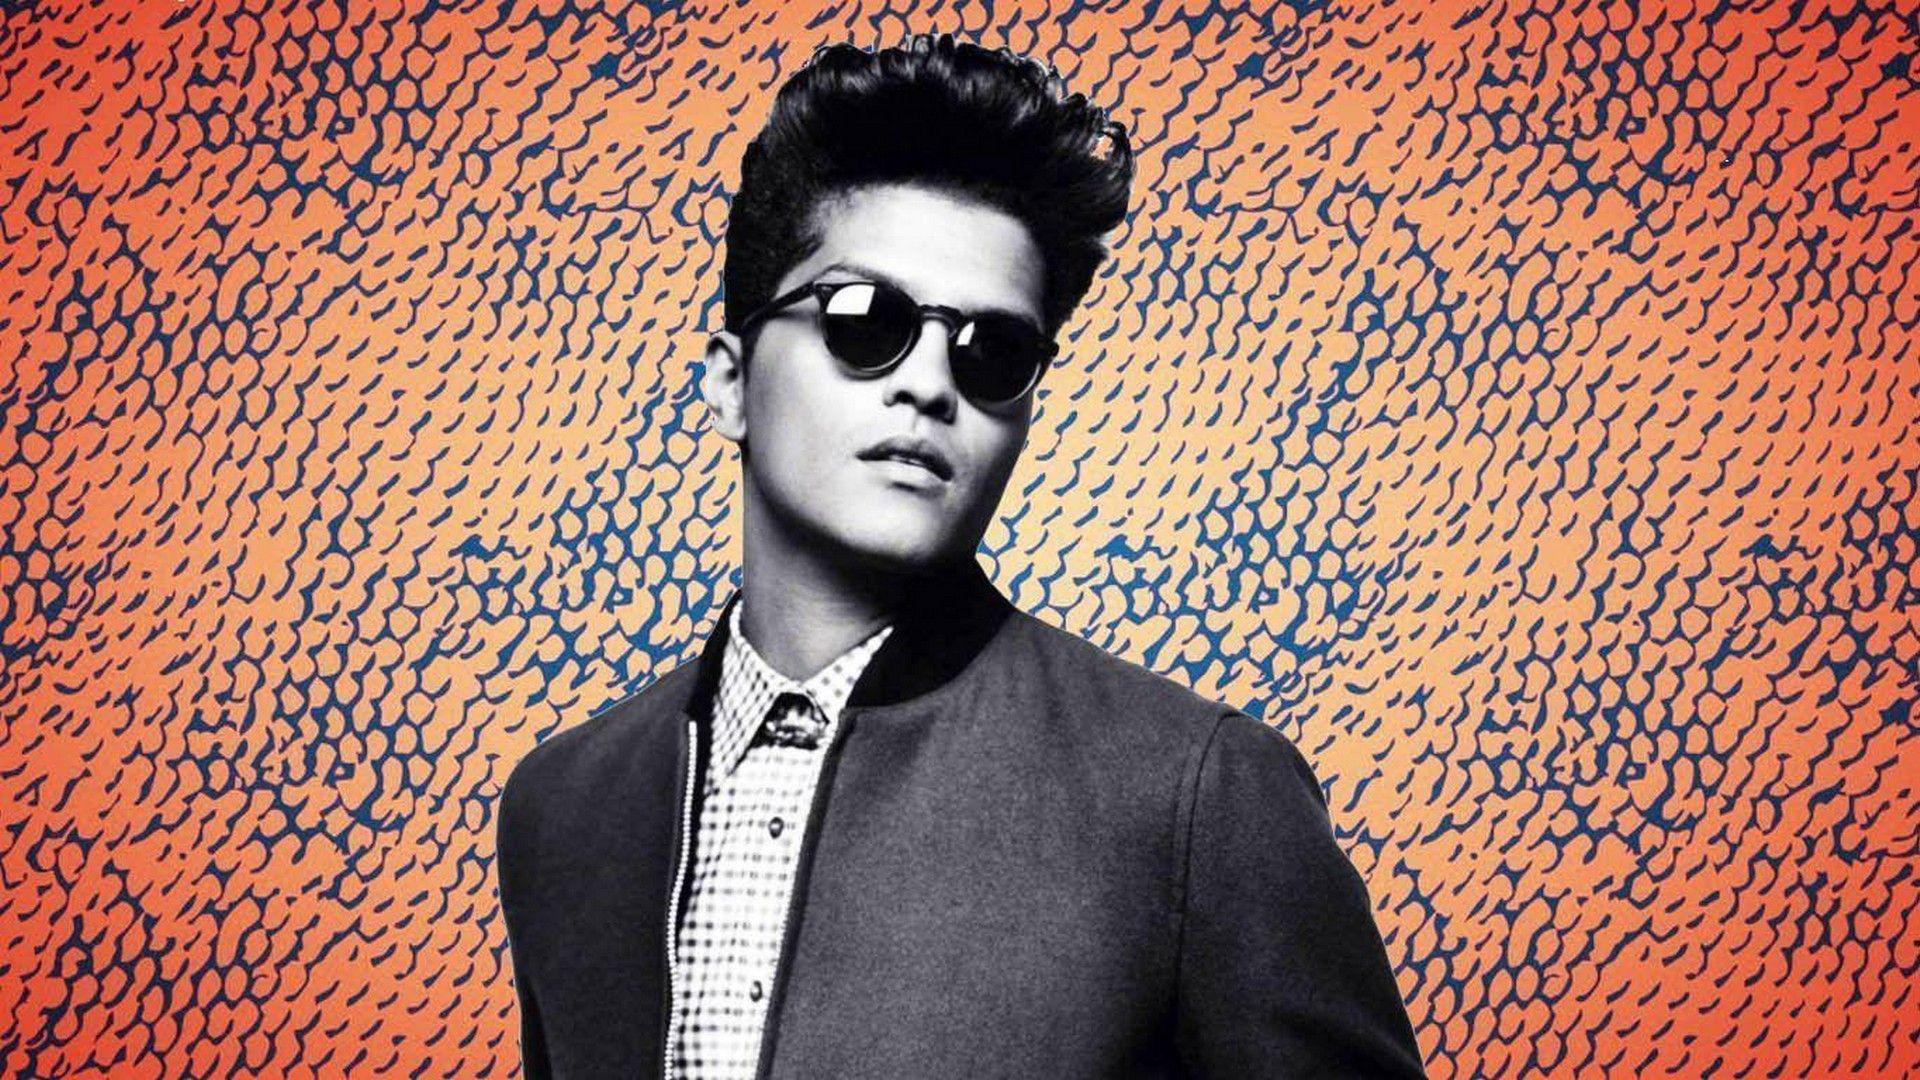 Bruno Mars Wallpaper HD. Bruno mars, Mac